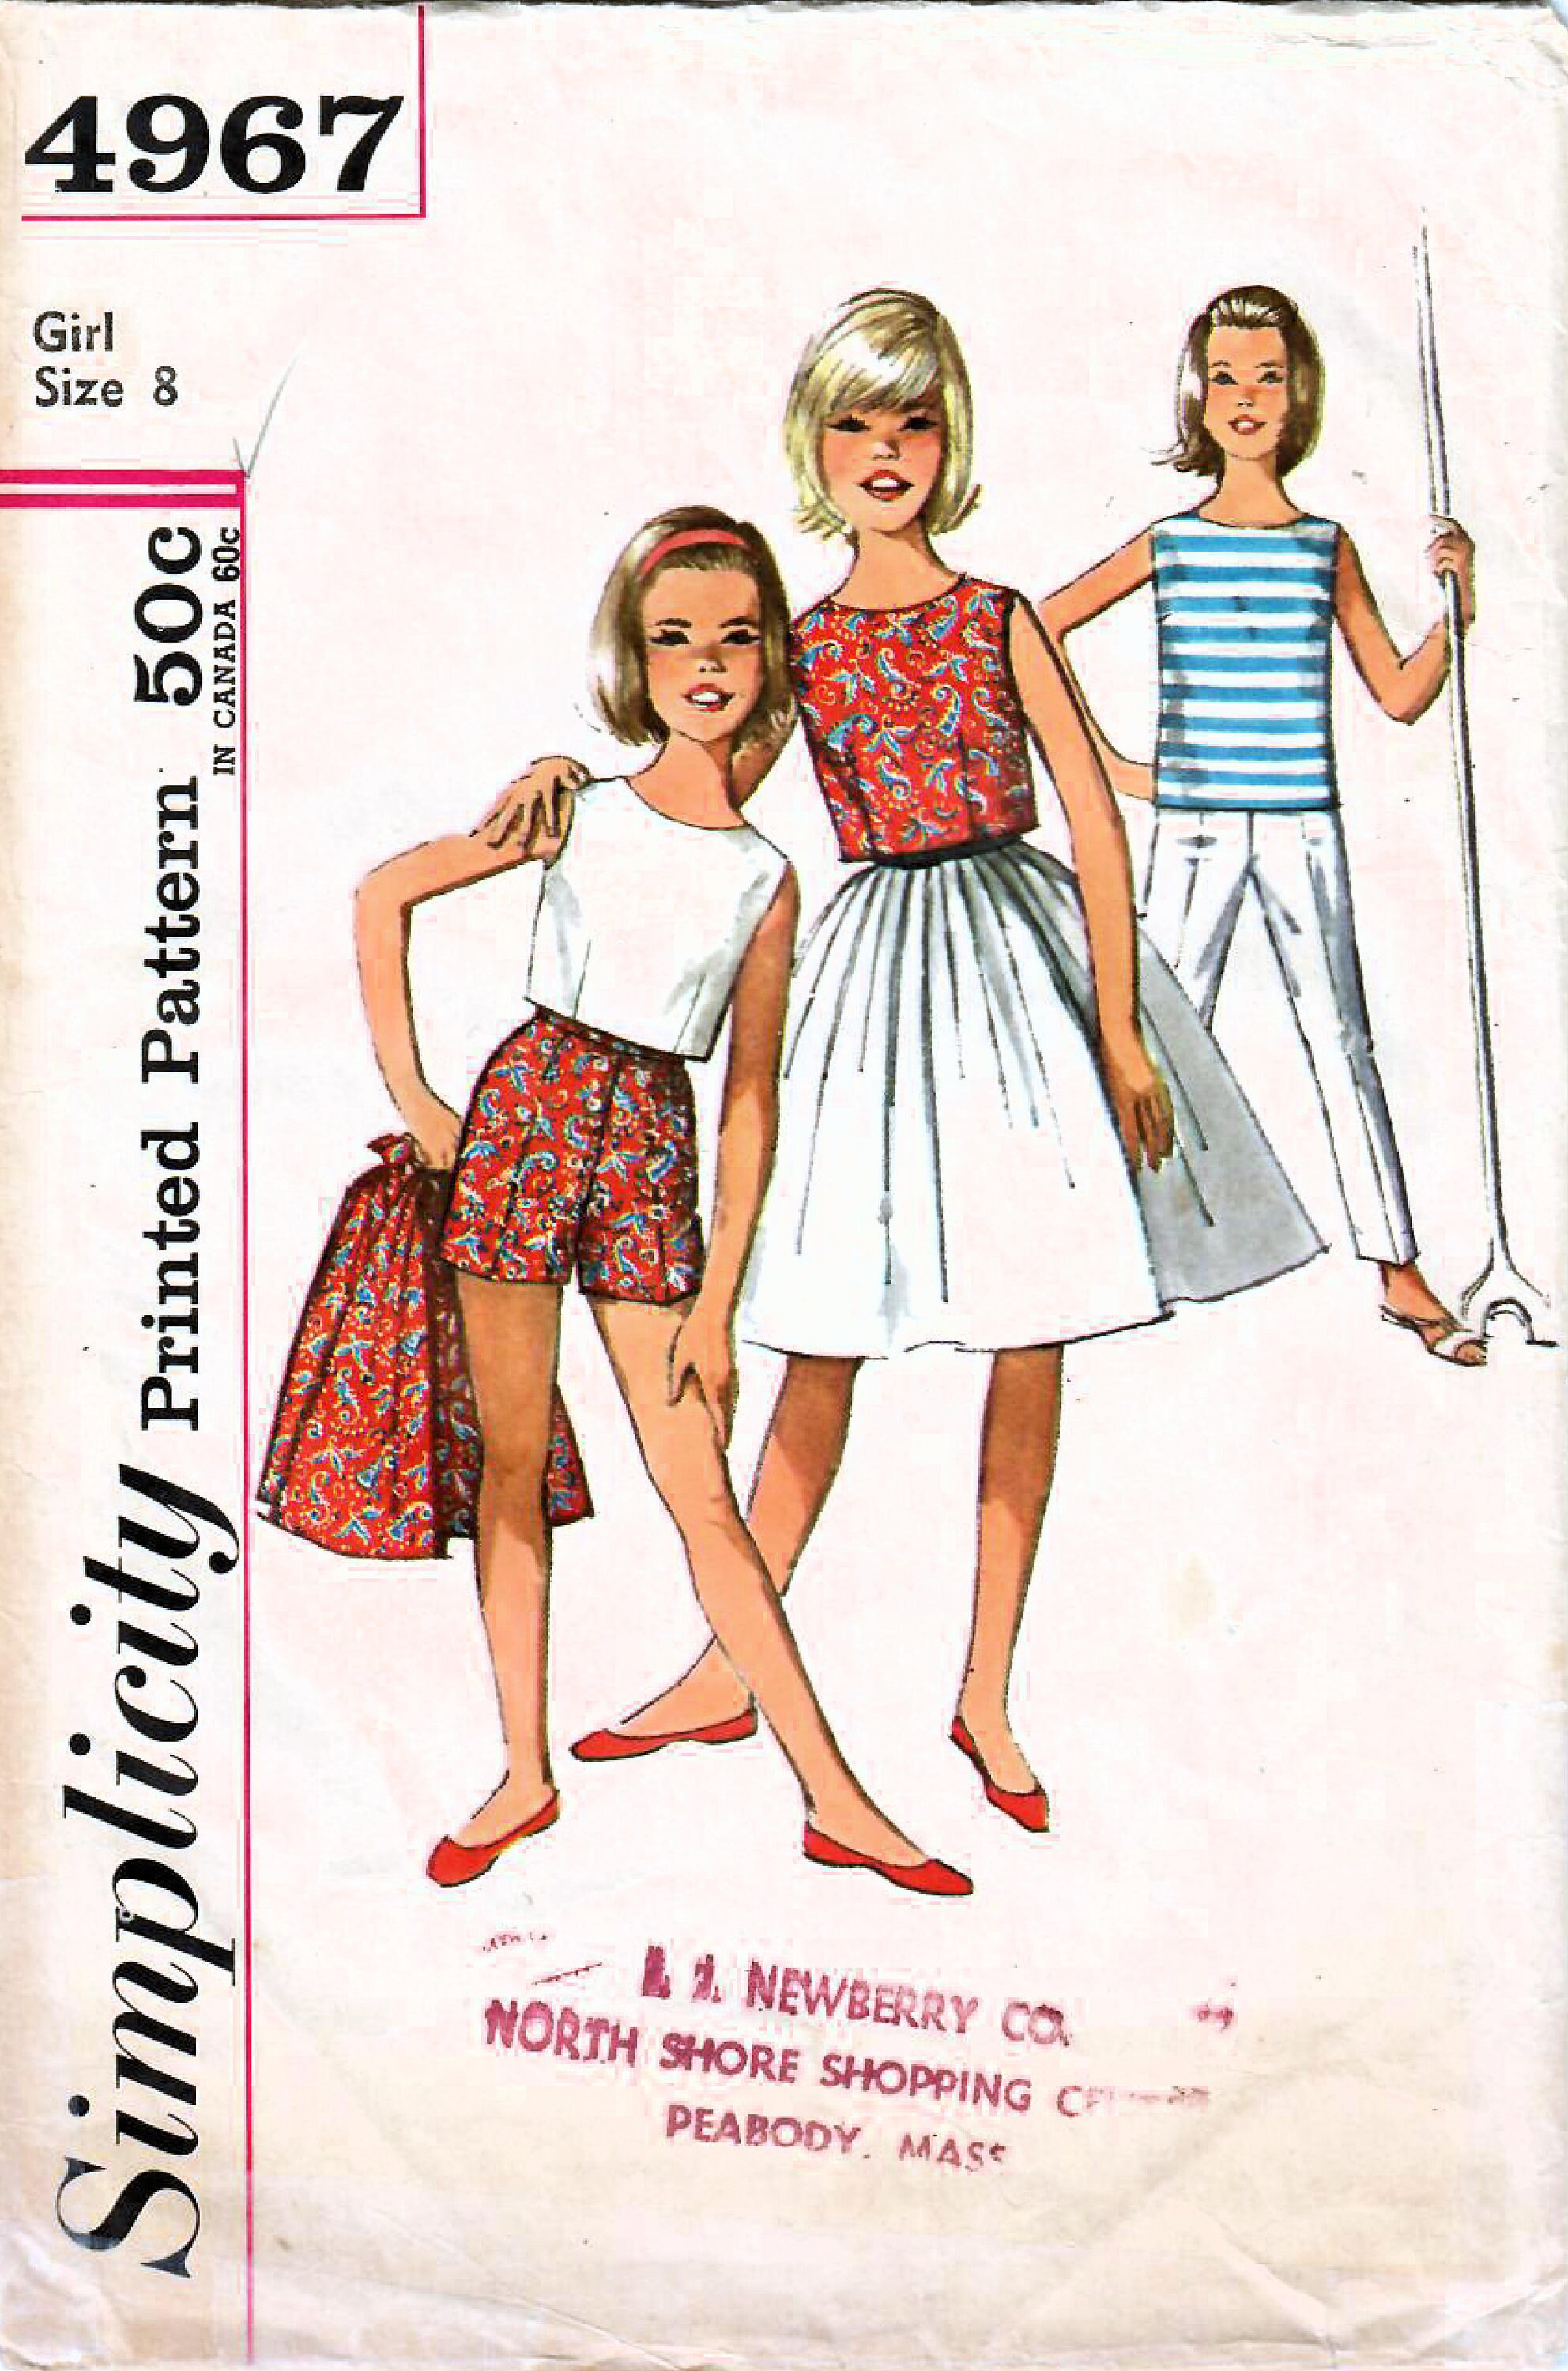 A-Line Dress Pattern Simplicity 1960's - Angel Elegance Vintage